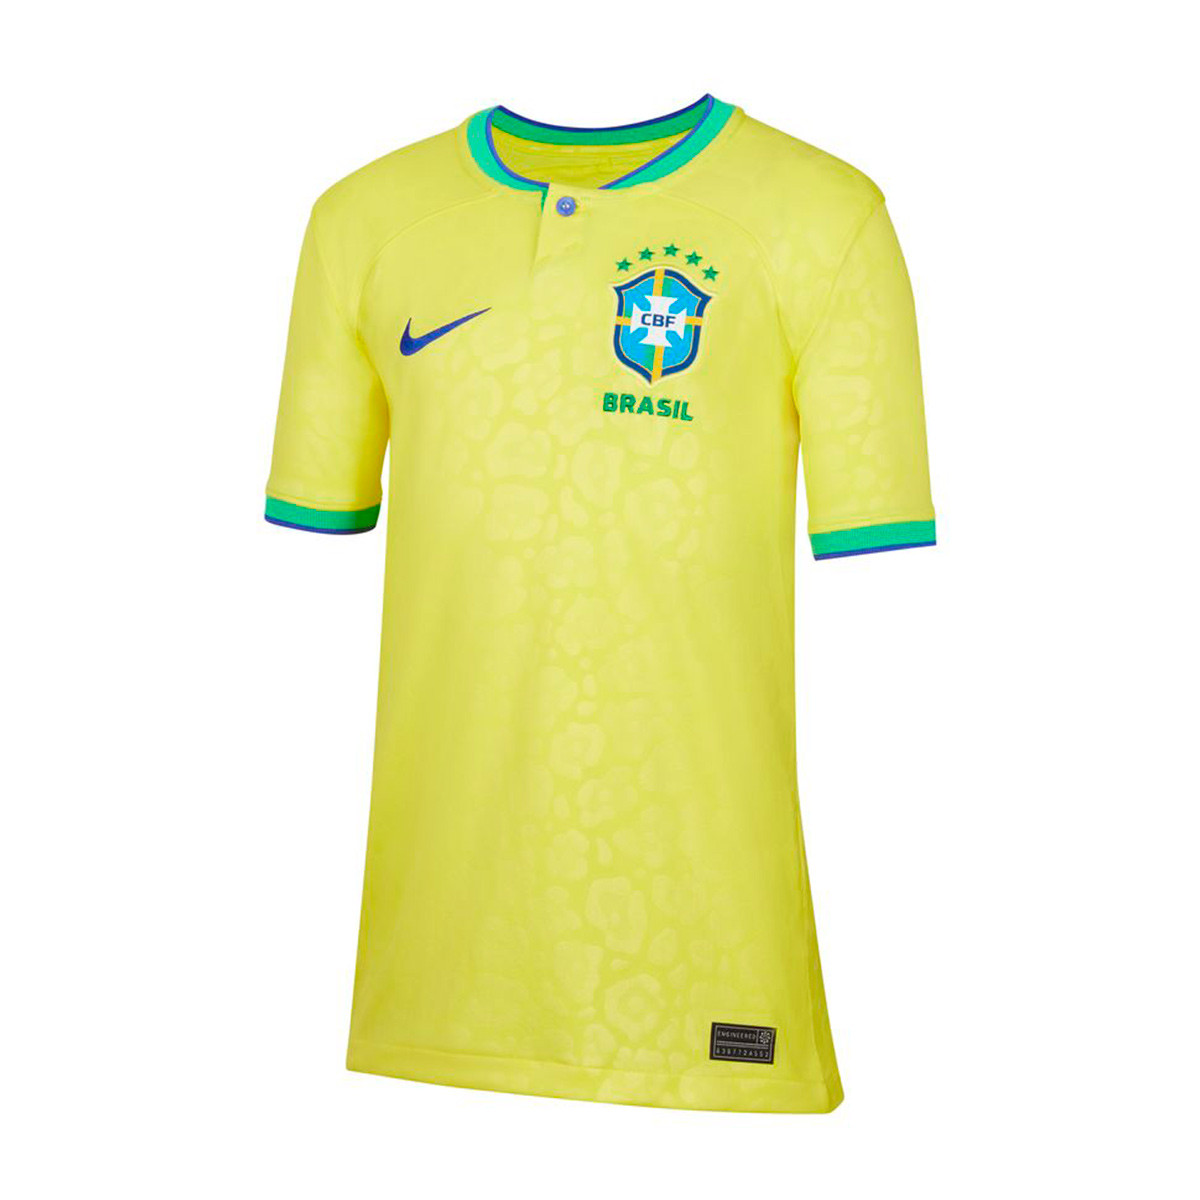 Camiseta Nike Equipación Mundial Qatar 2022 Niño Dynamic Yellow-Green Spark-Paramount Blue - Fútbol Emotion